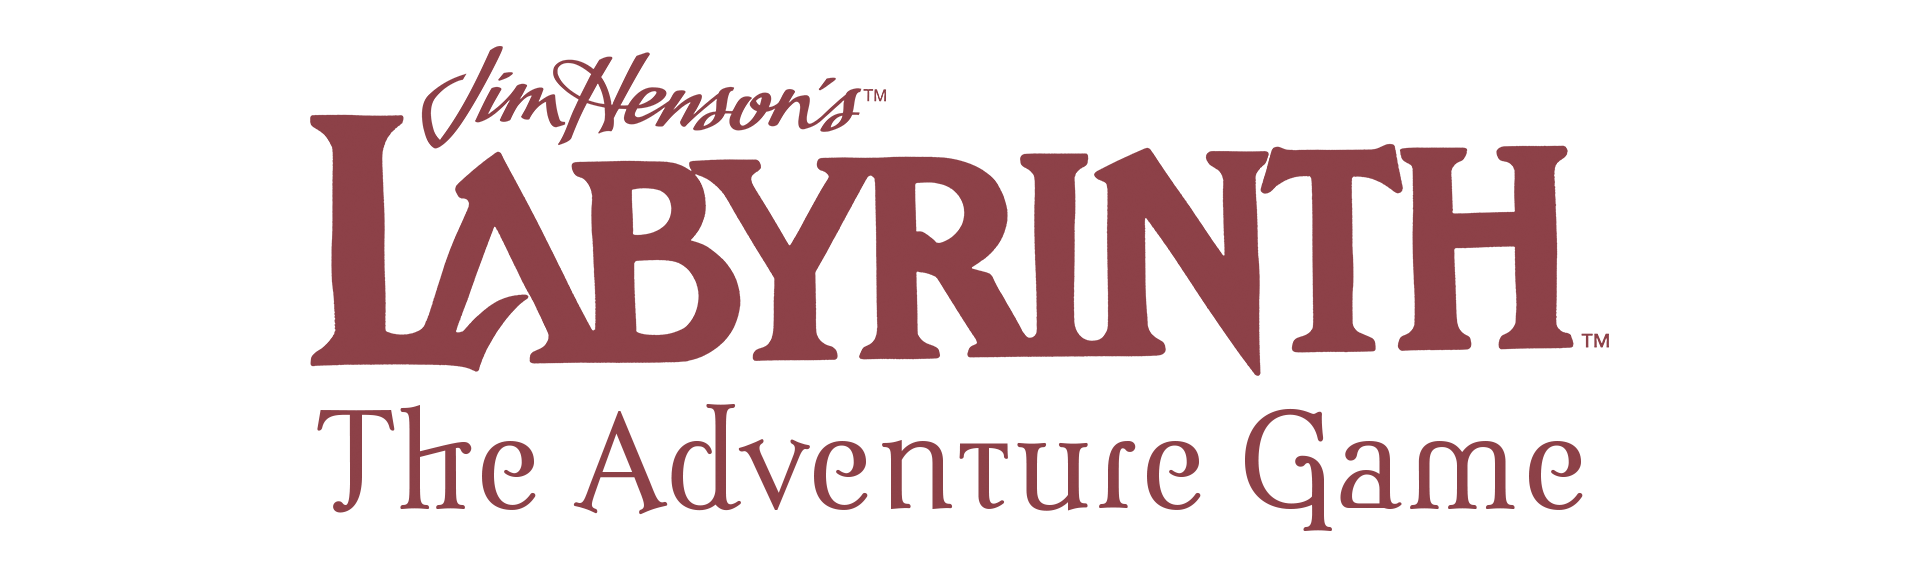 Jim-Henson-s-Labyrinth-The-Adventure-Game